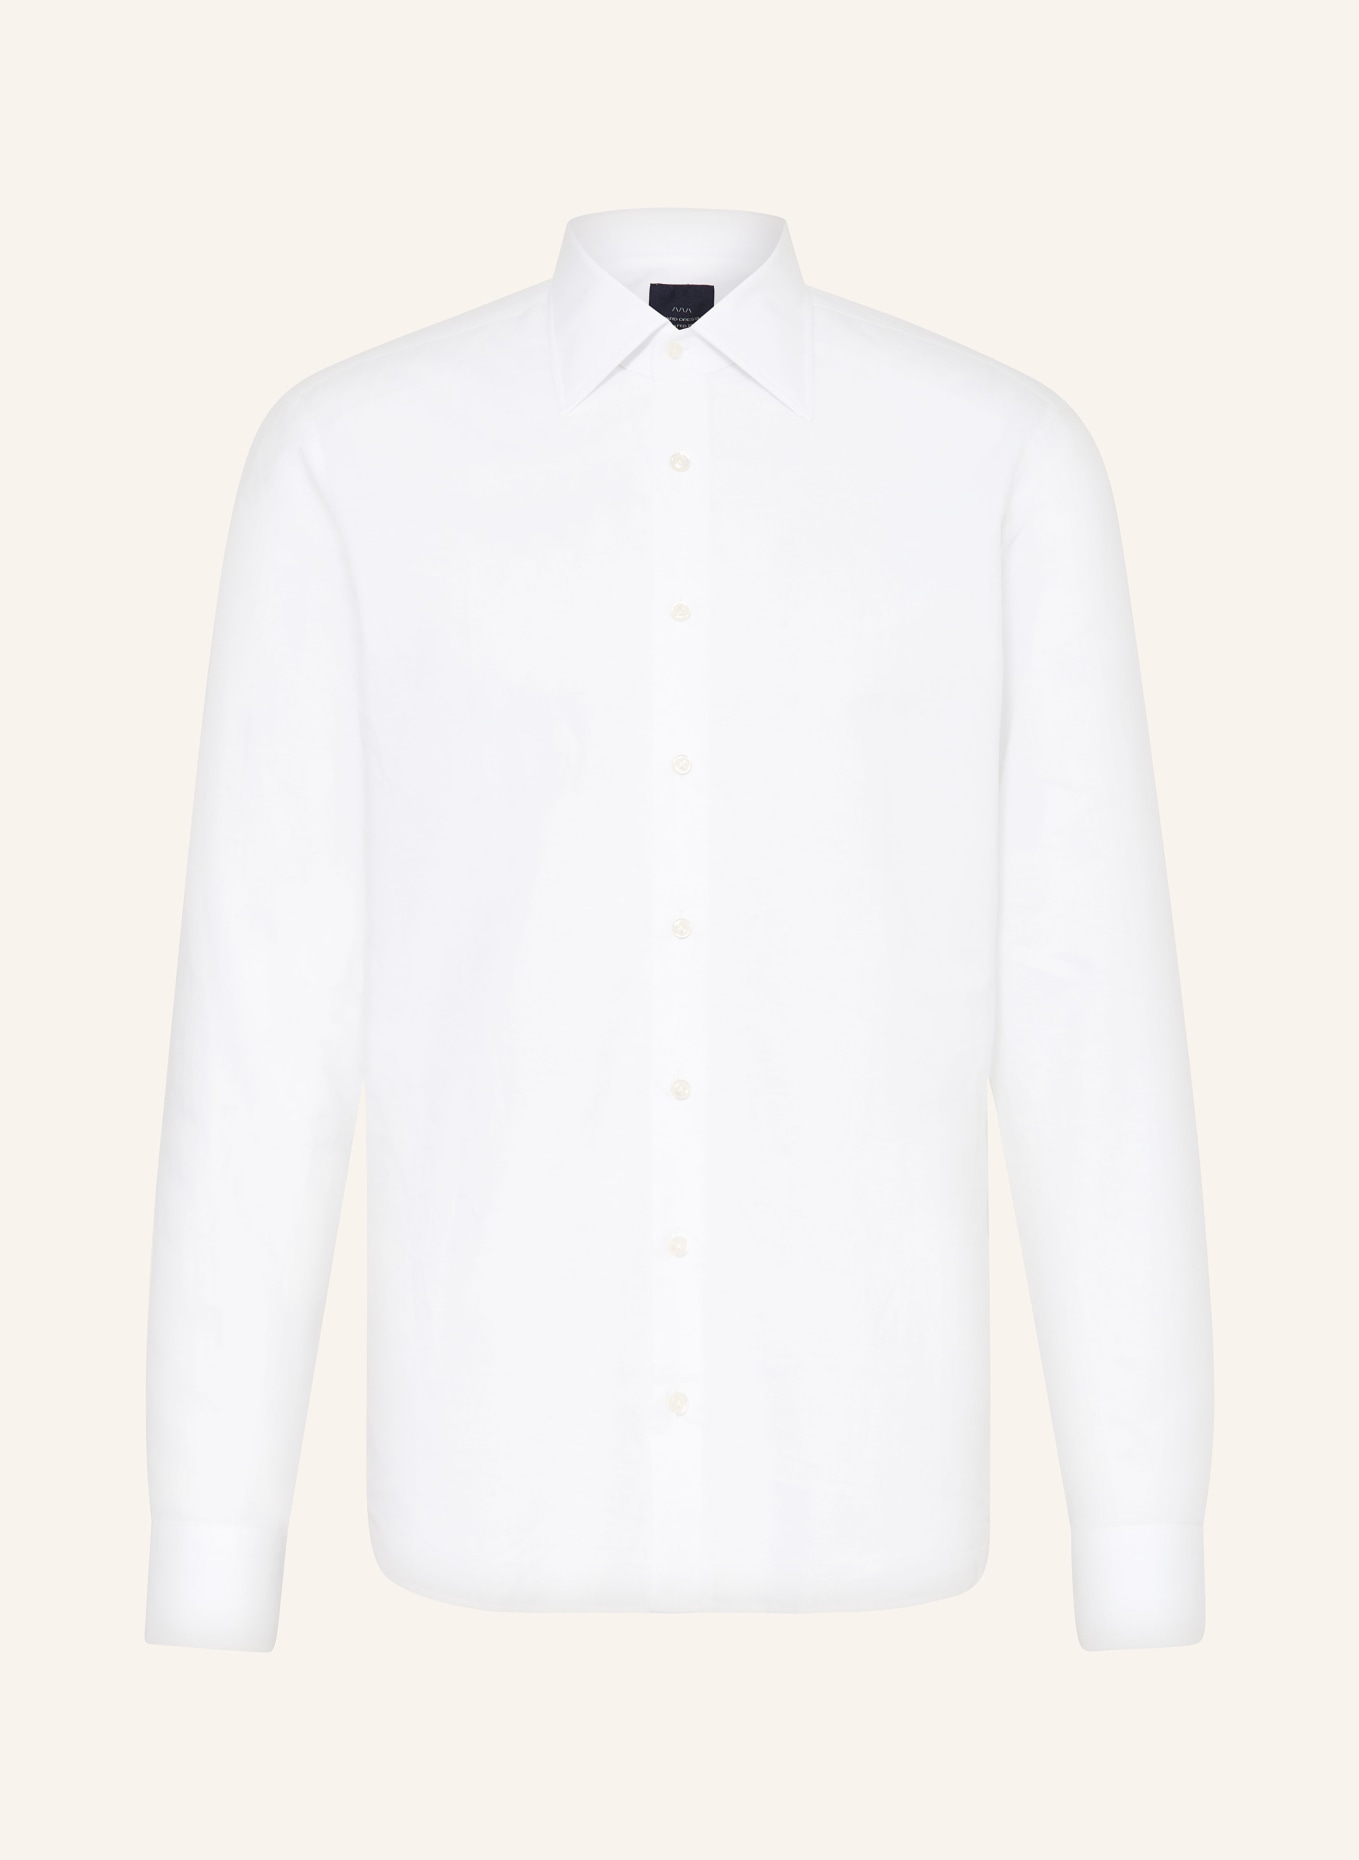 EDUARD DRESSLER Hemd Shaped Fit mit Leinen, Farbe: 079 WEISS (Bild 1)